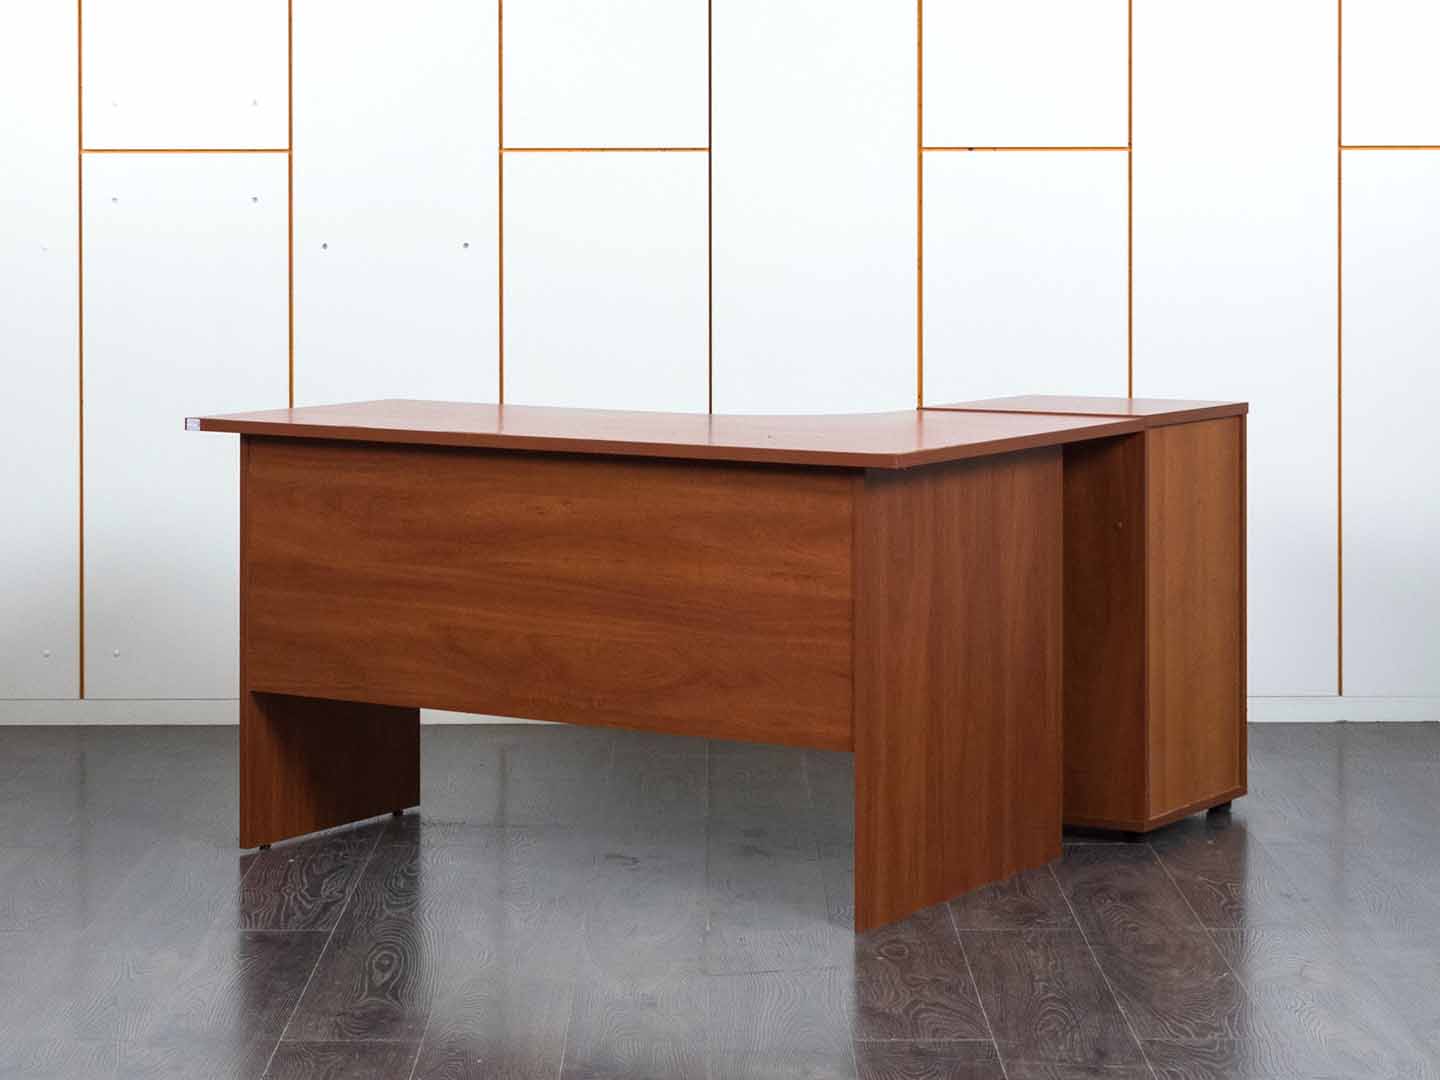 Комплект офисной мебели стол с тумбой  1 400х900х750 ЛДСП Вишня   (СПУШ1лК-29120)